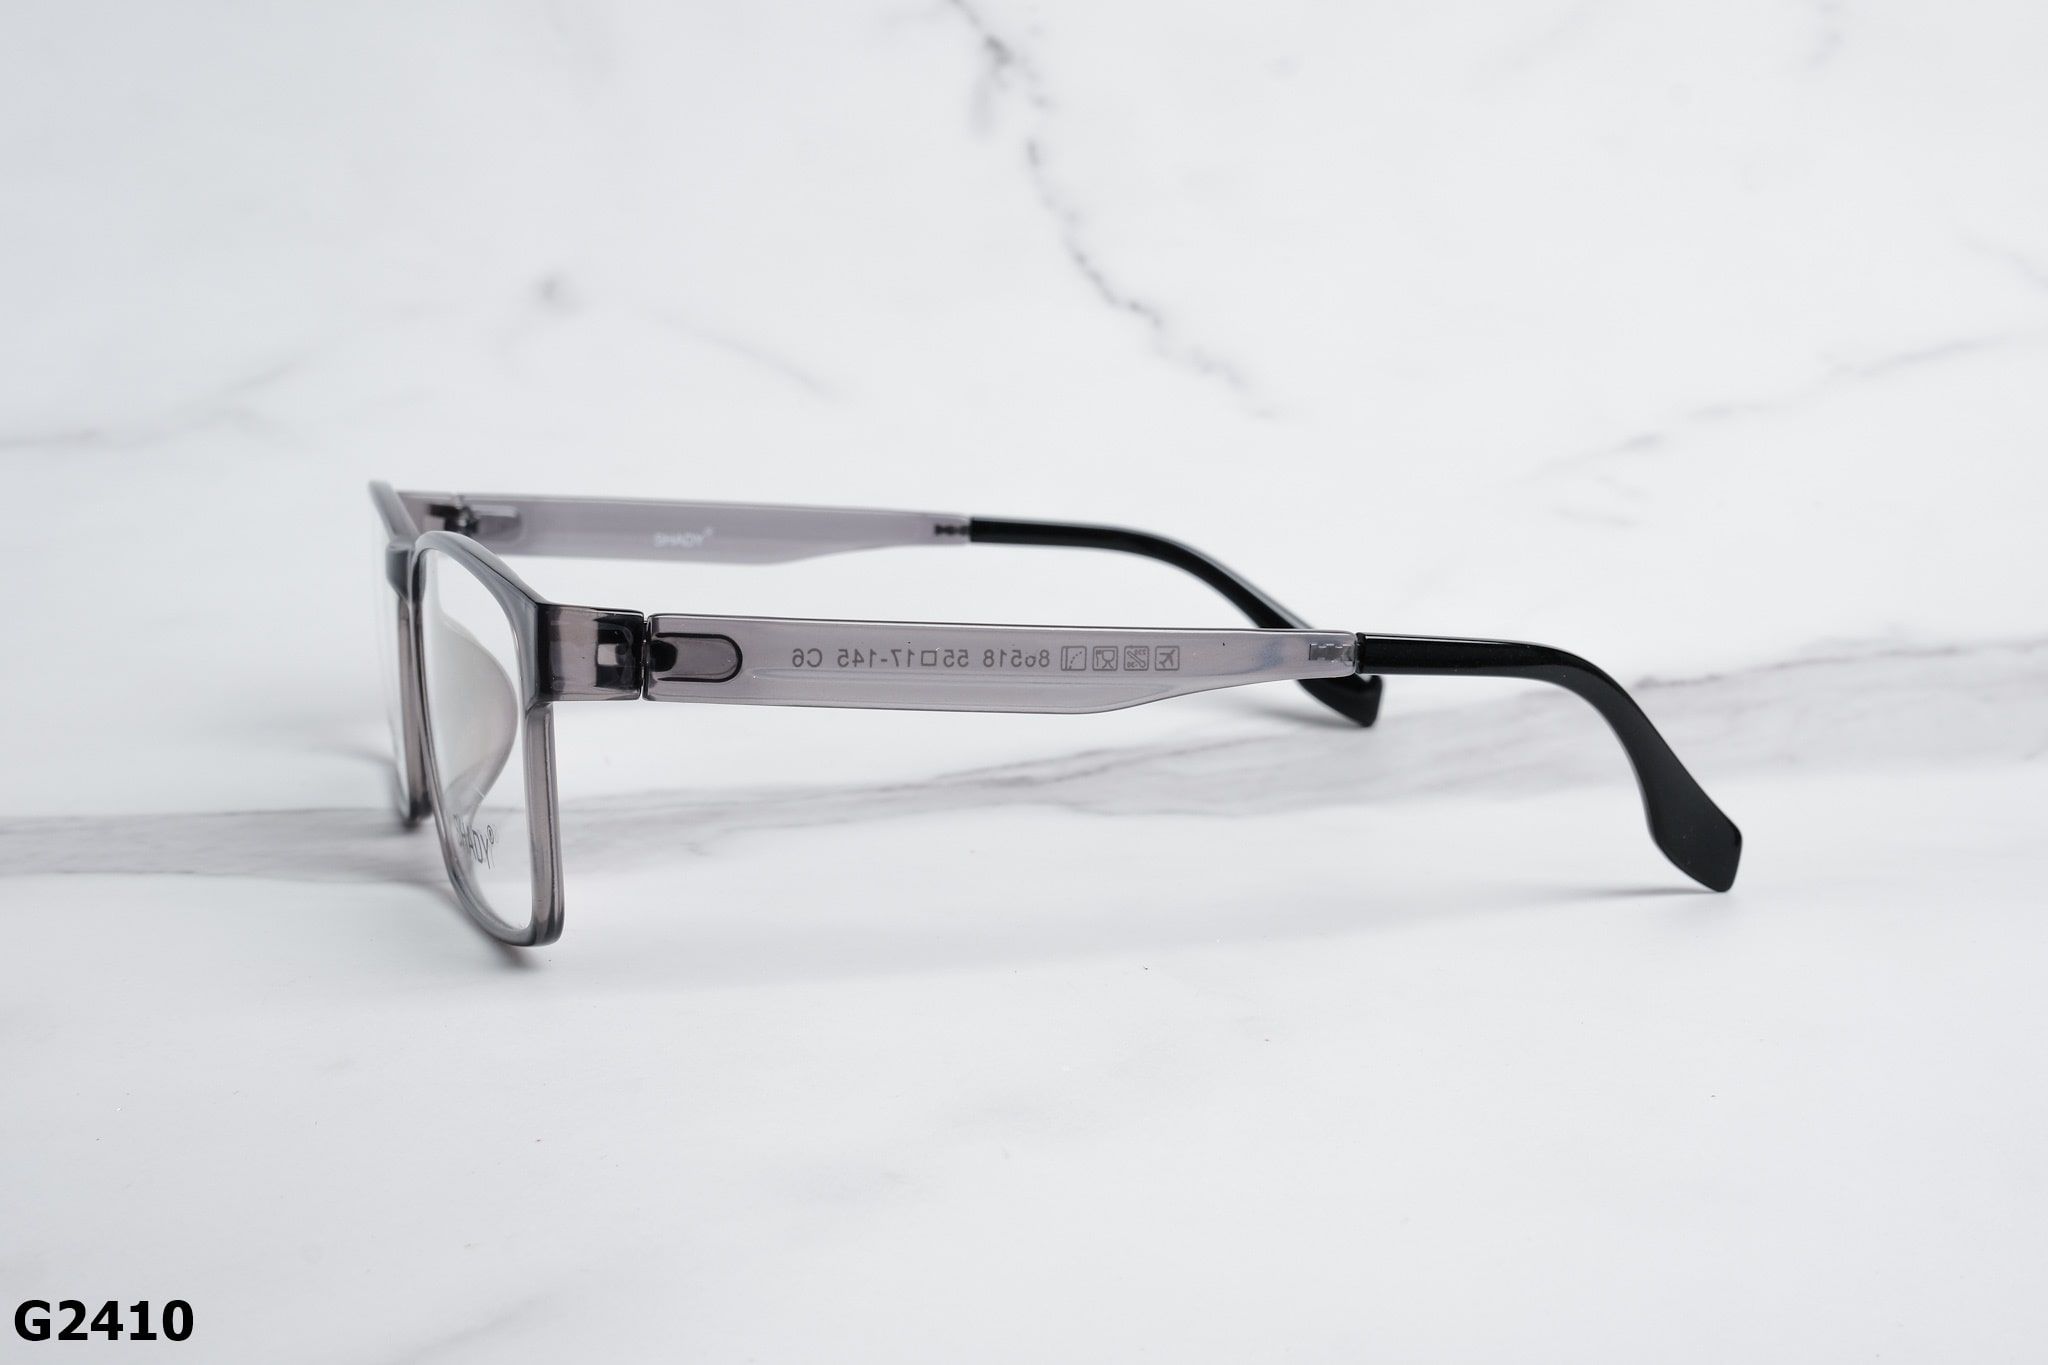  SHADY Eyewear - Glasses - G2410 